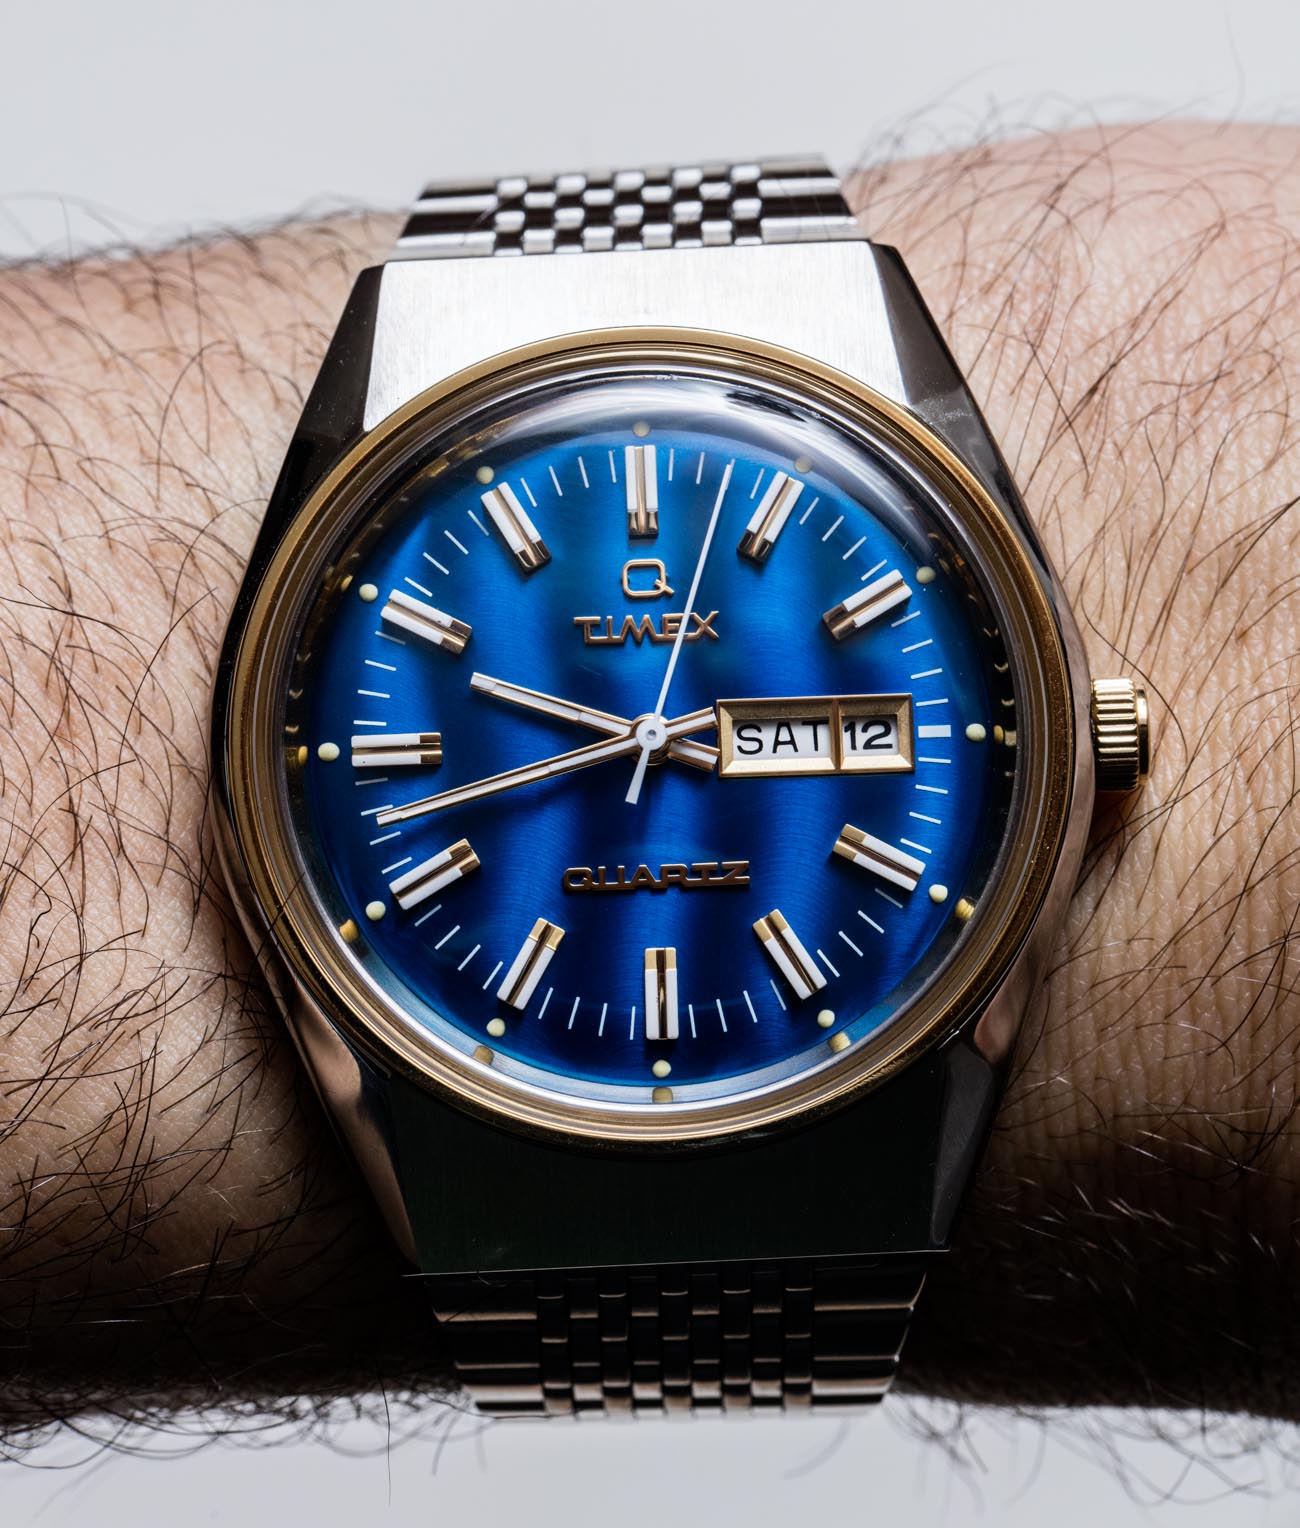 Q Timex Falcon Eye Watch Review | aBlogtoWatch